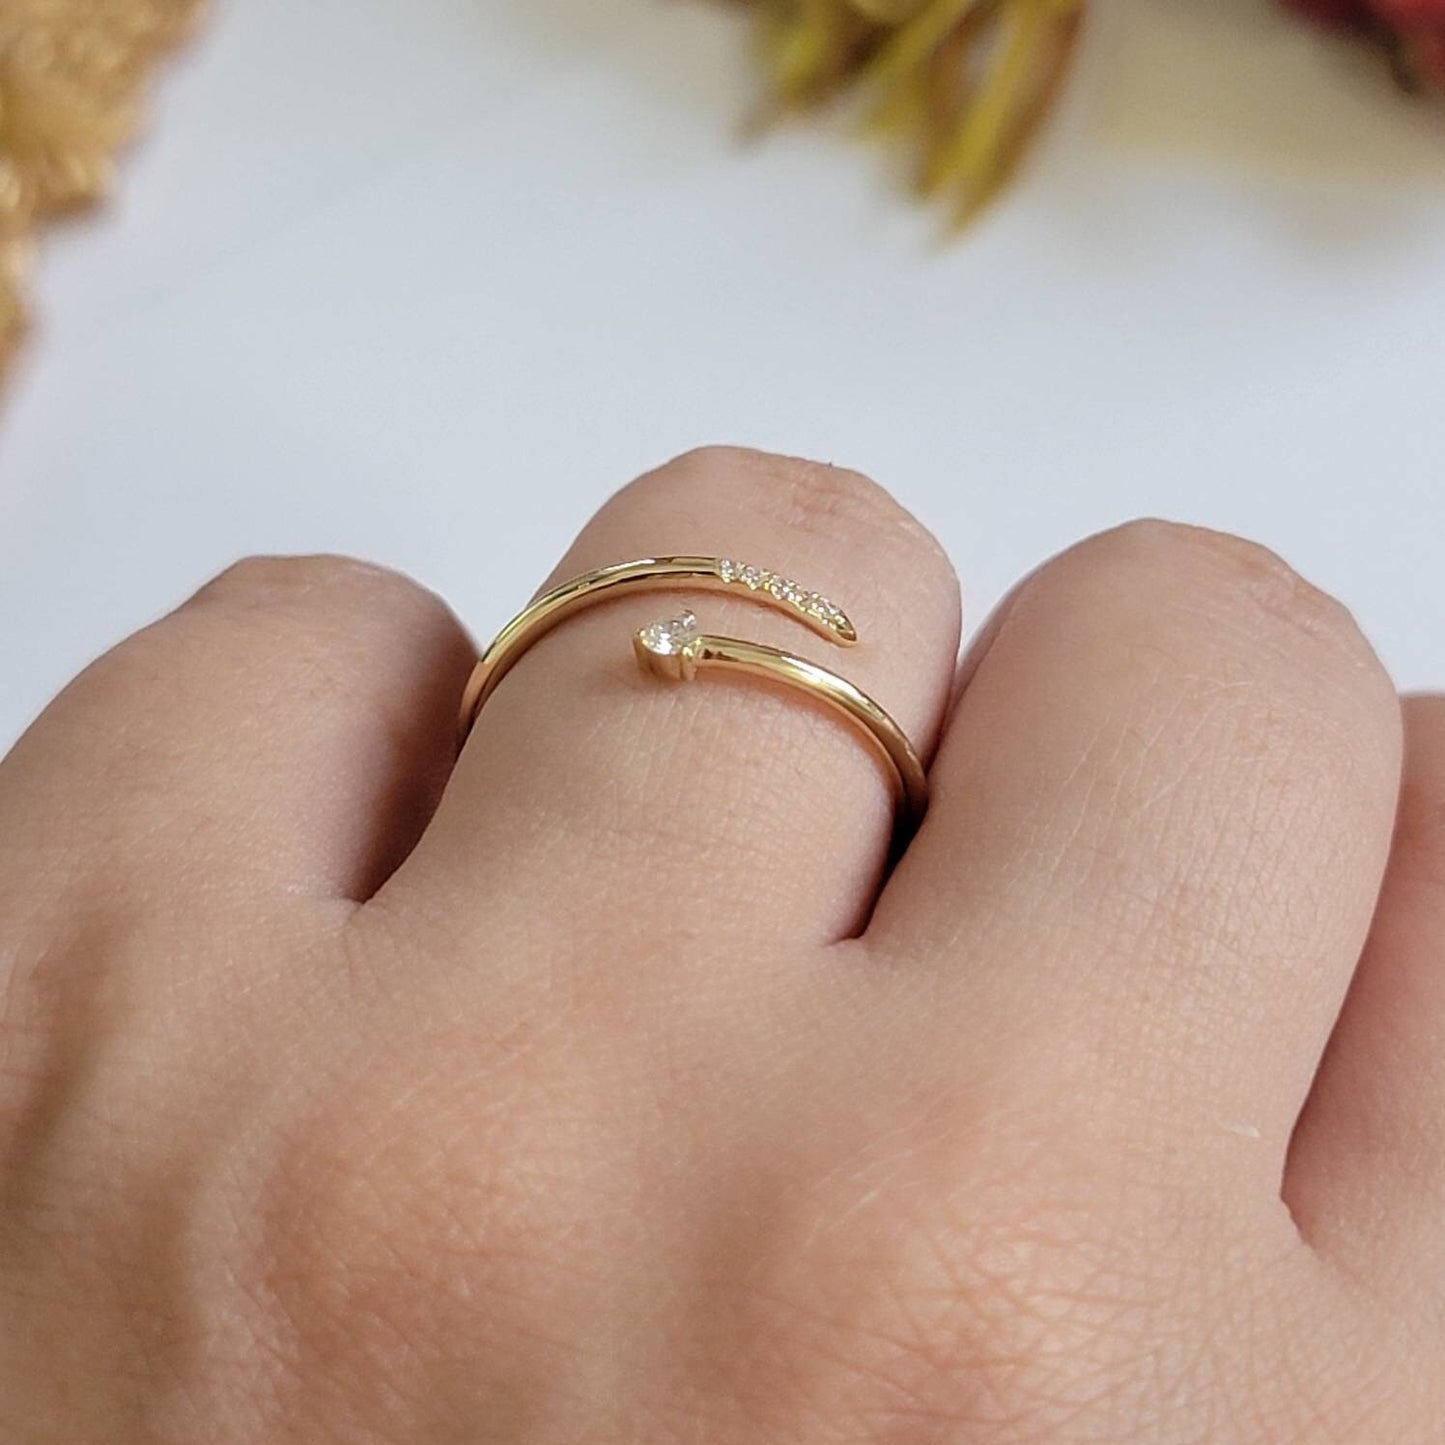 14k Solid Gold Spiral Diamond Ring, Diamond Wrap Ring, Spiral Ring, Dainty Diamond Ring, Minimalist Ring, Handmade Jewelry